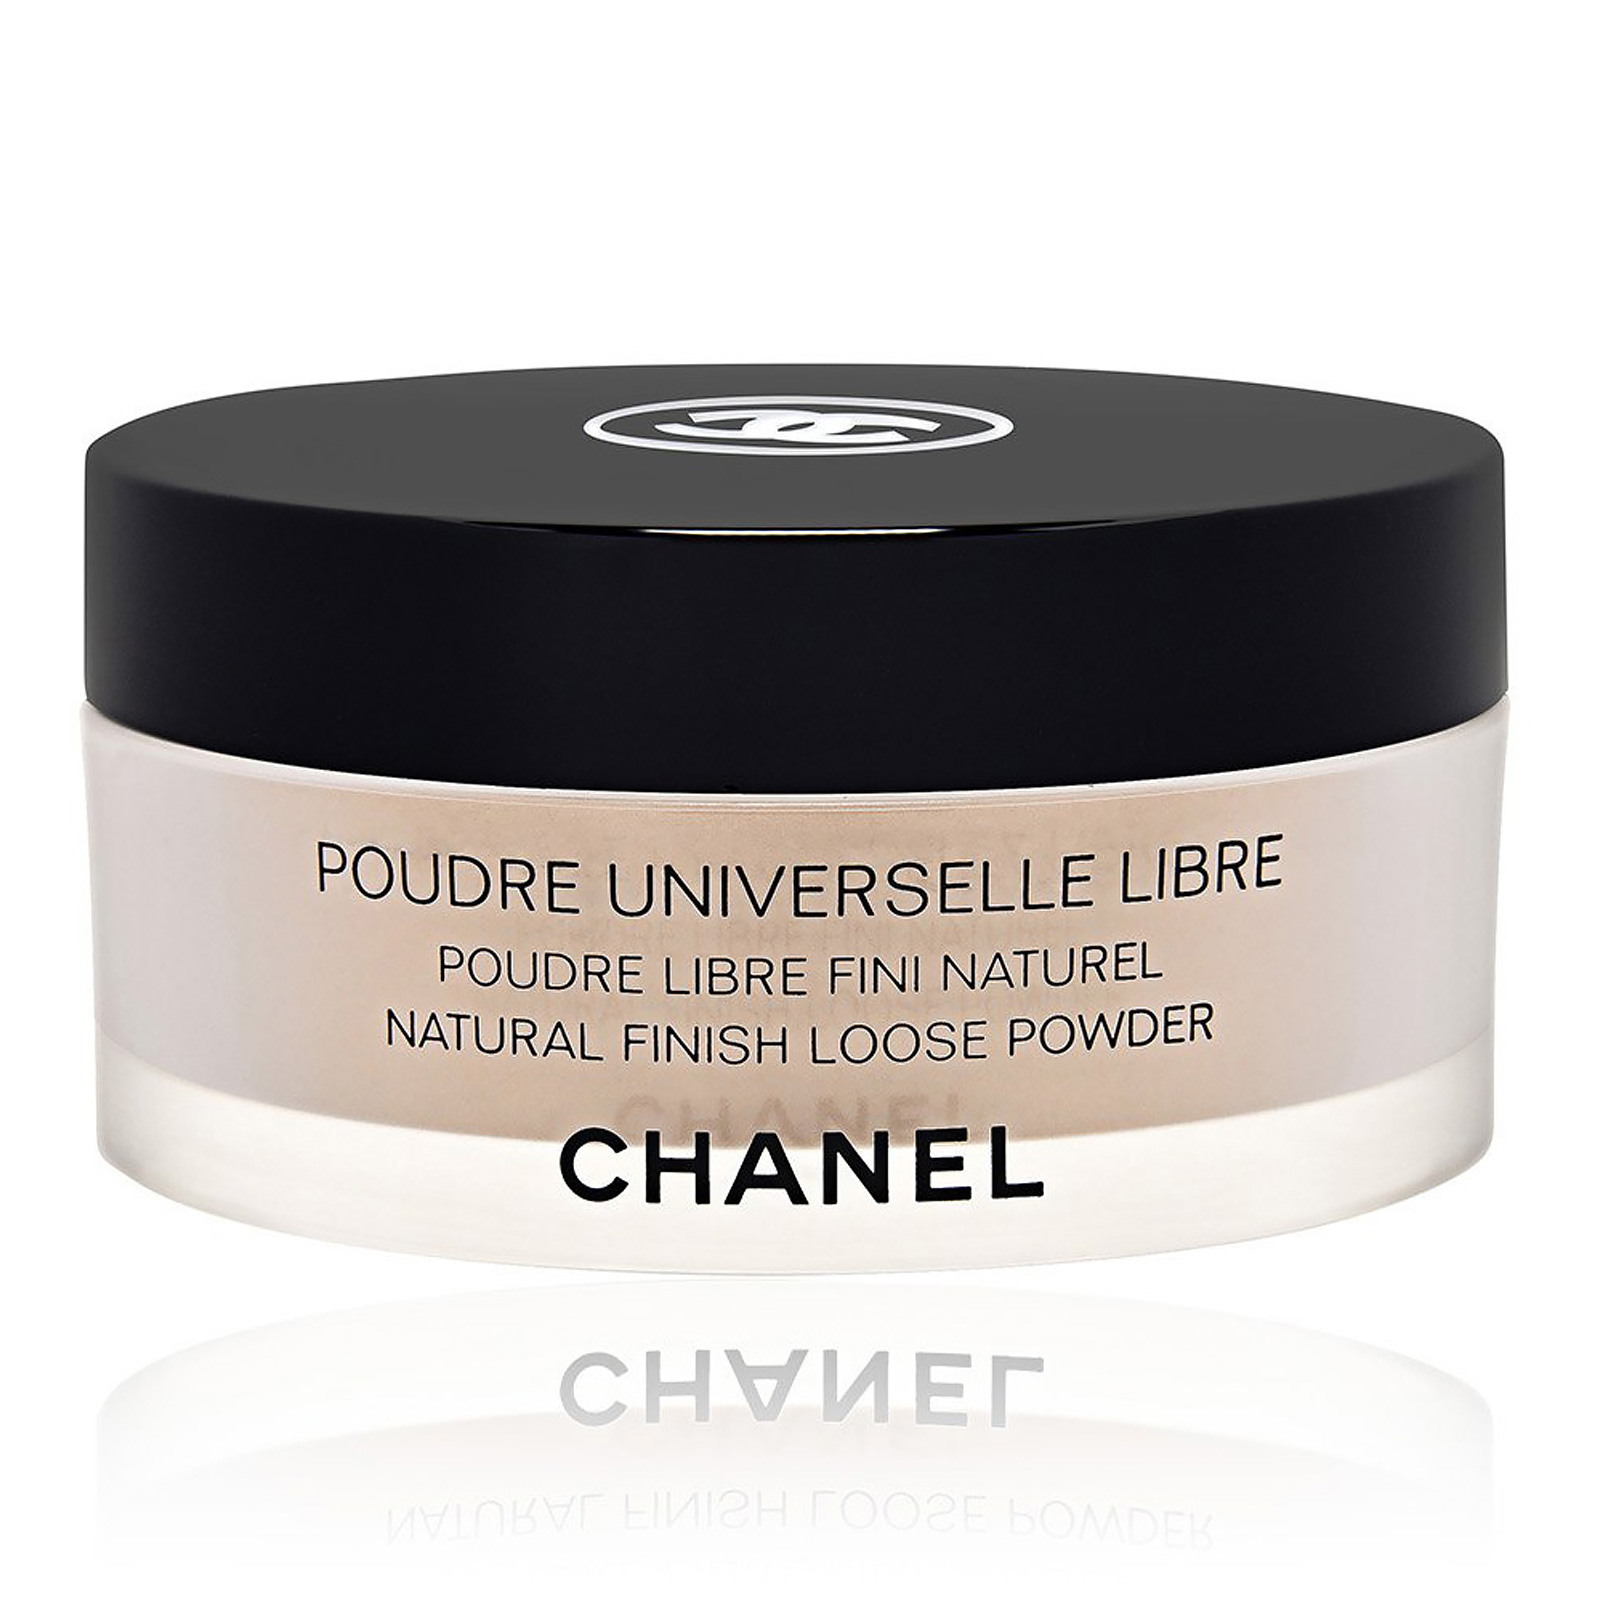 Chanel Poudre Universelle Libre Natural Finish Loose Powder30 g 1 oz AKB  Beauty